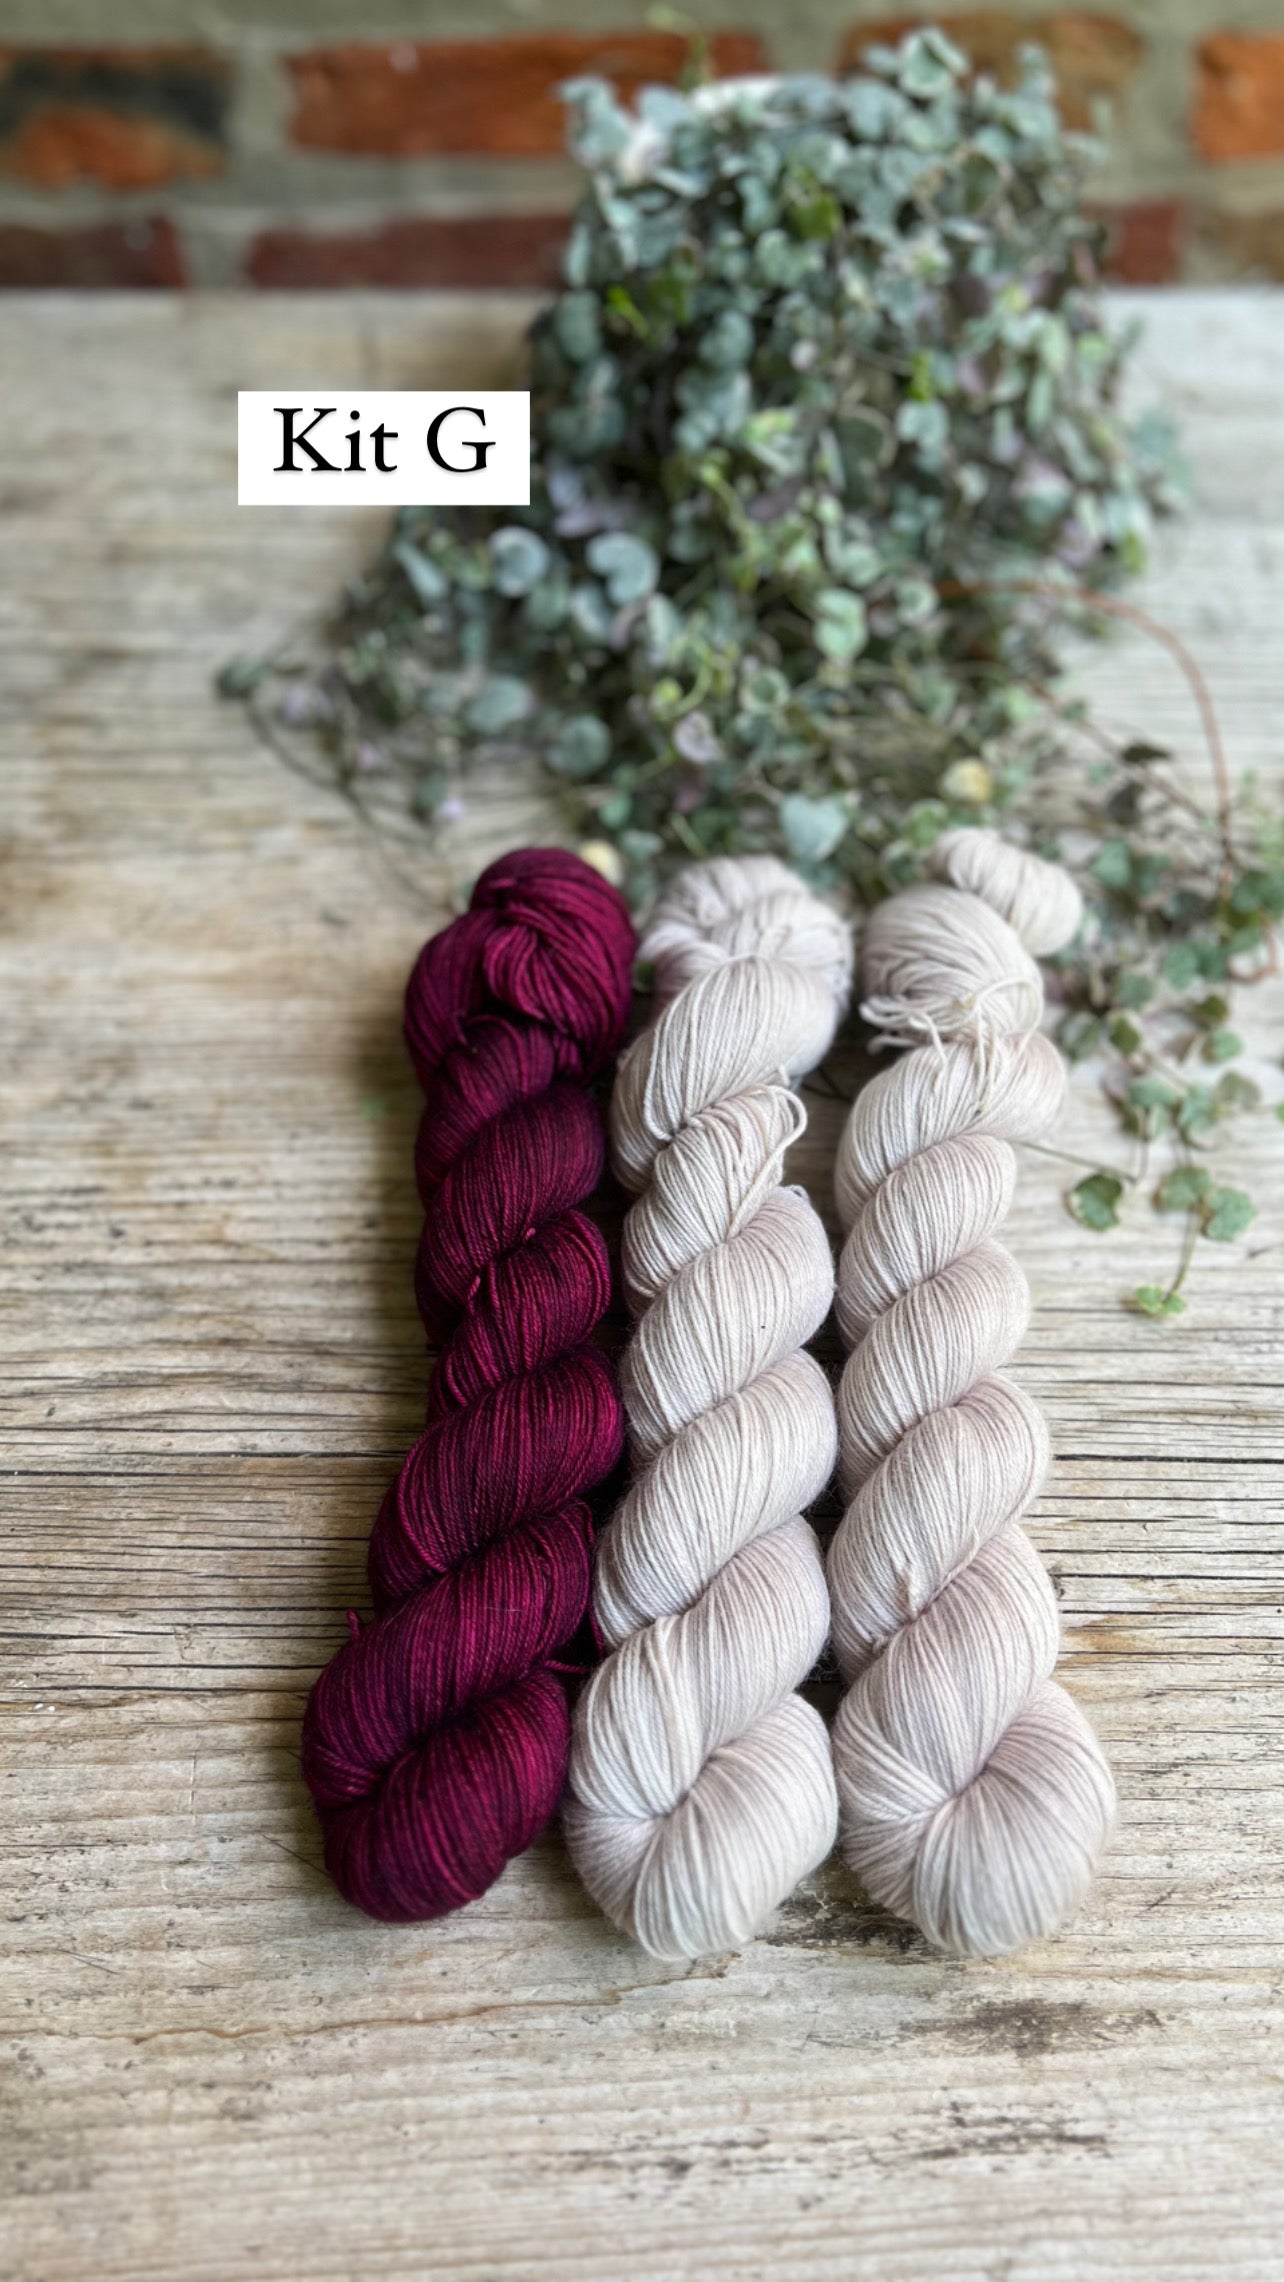 Alpine Bloom Tee by Caitlin Hunter of Boyland Knitwear